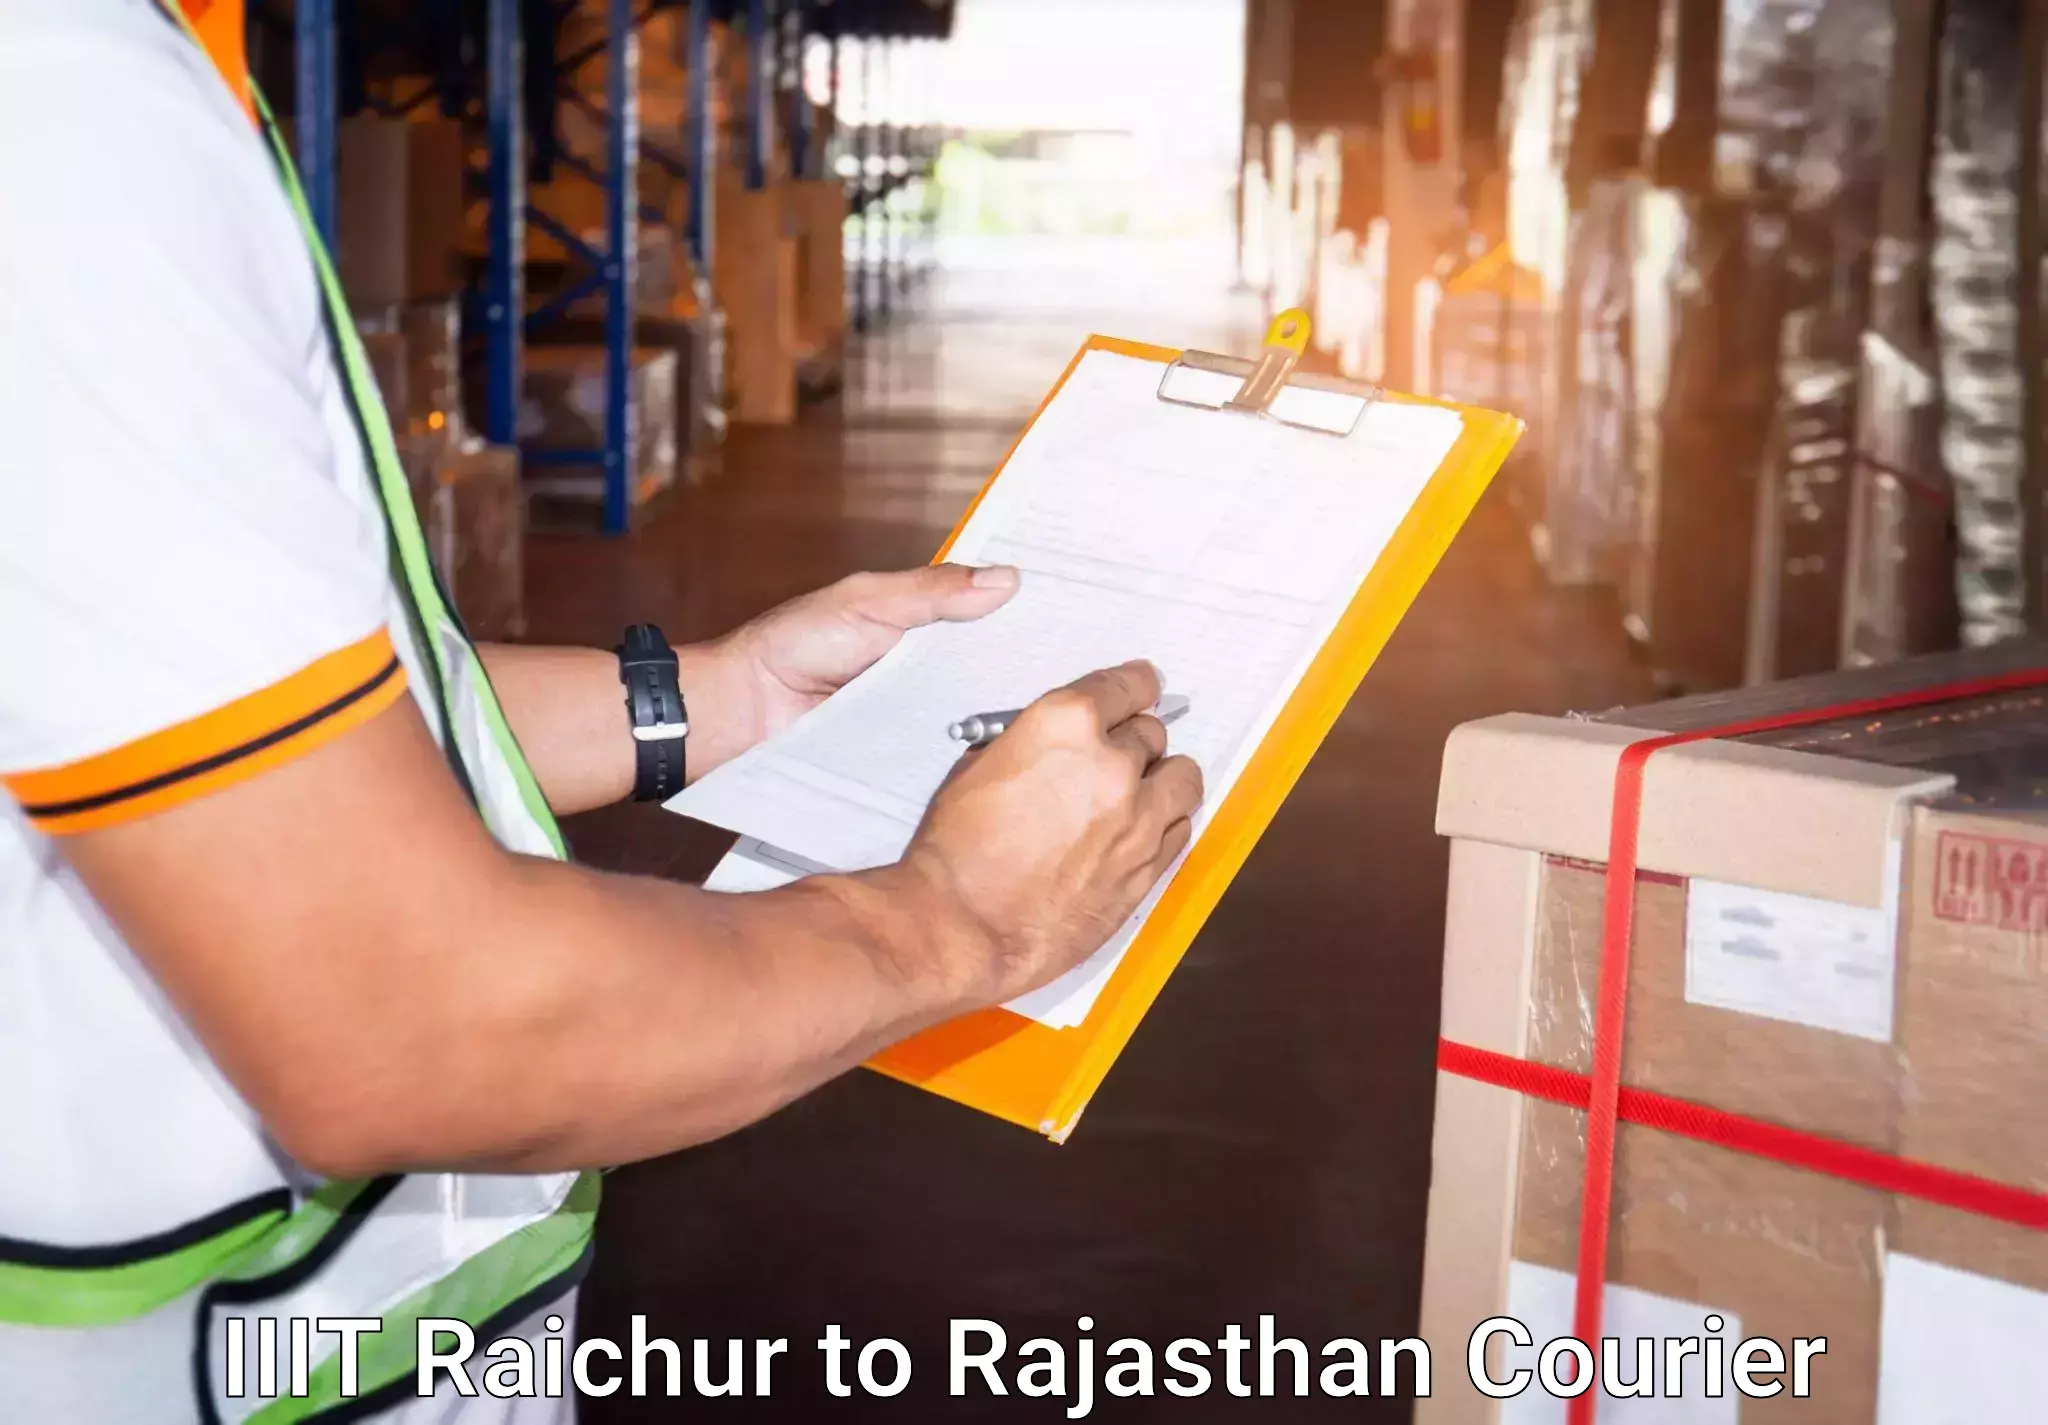 Baggage relocation service in IIIT Raichur to Tibbi